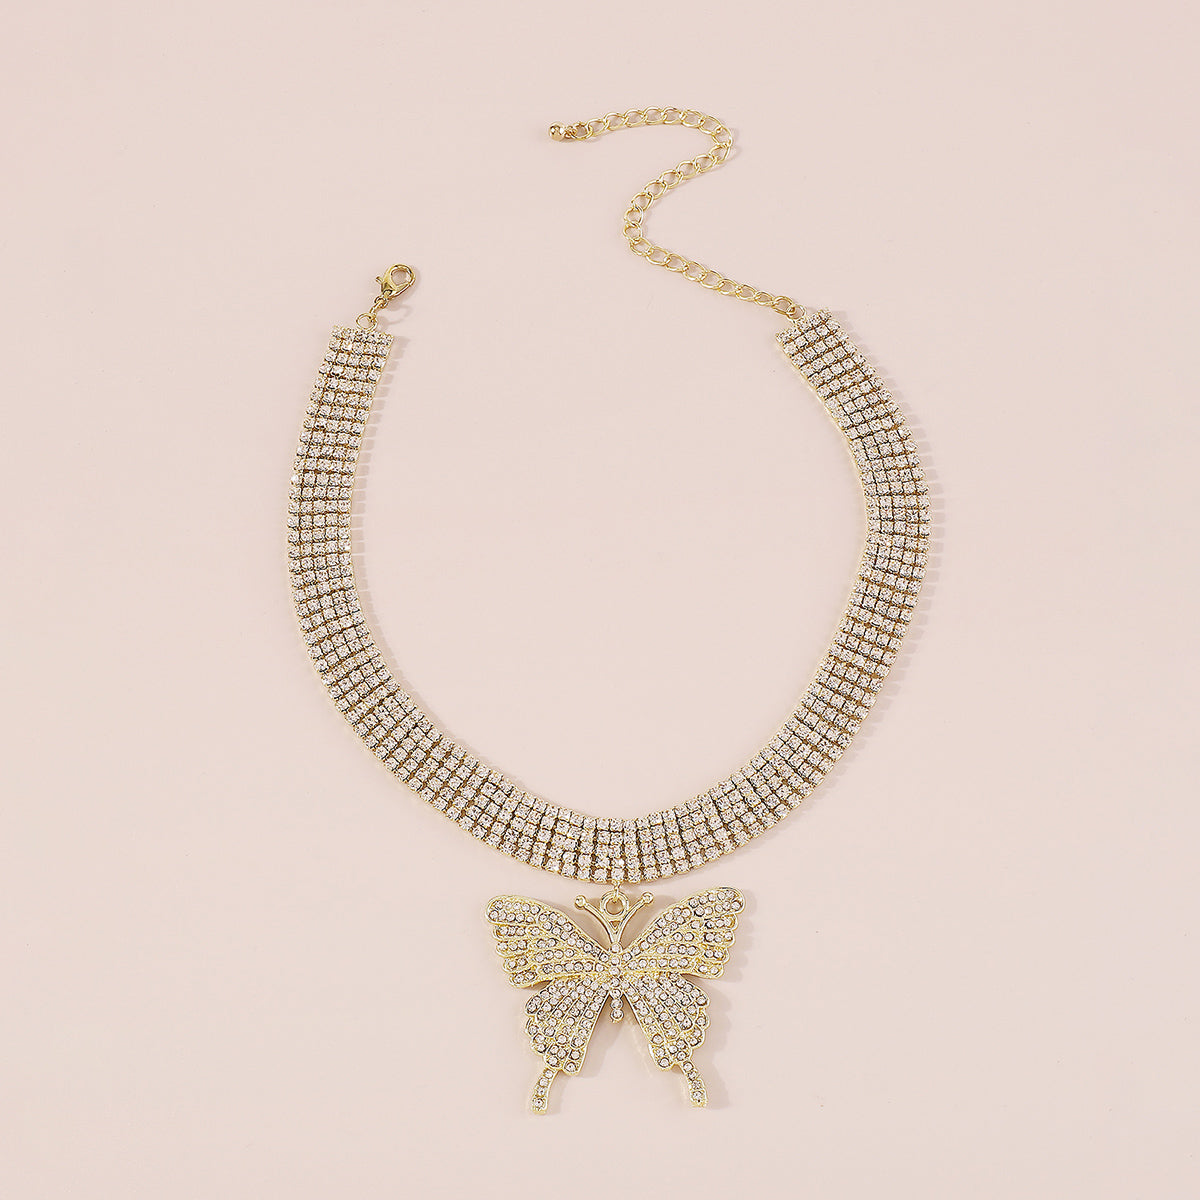 Elegant Butterfly Iron Inlay Rhinestones Women's Pendant Necklace